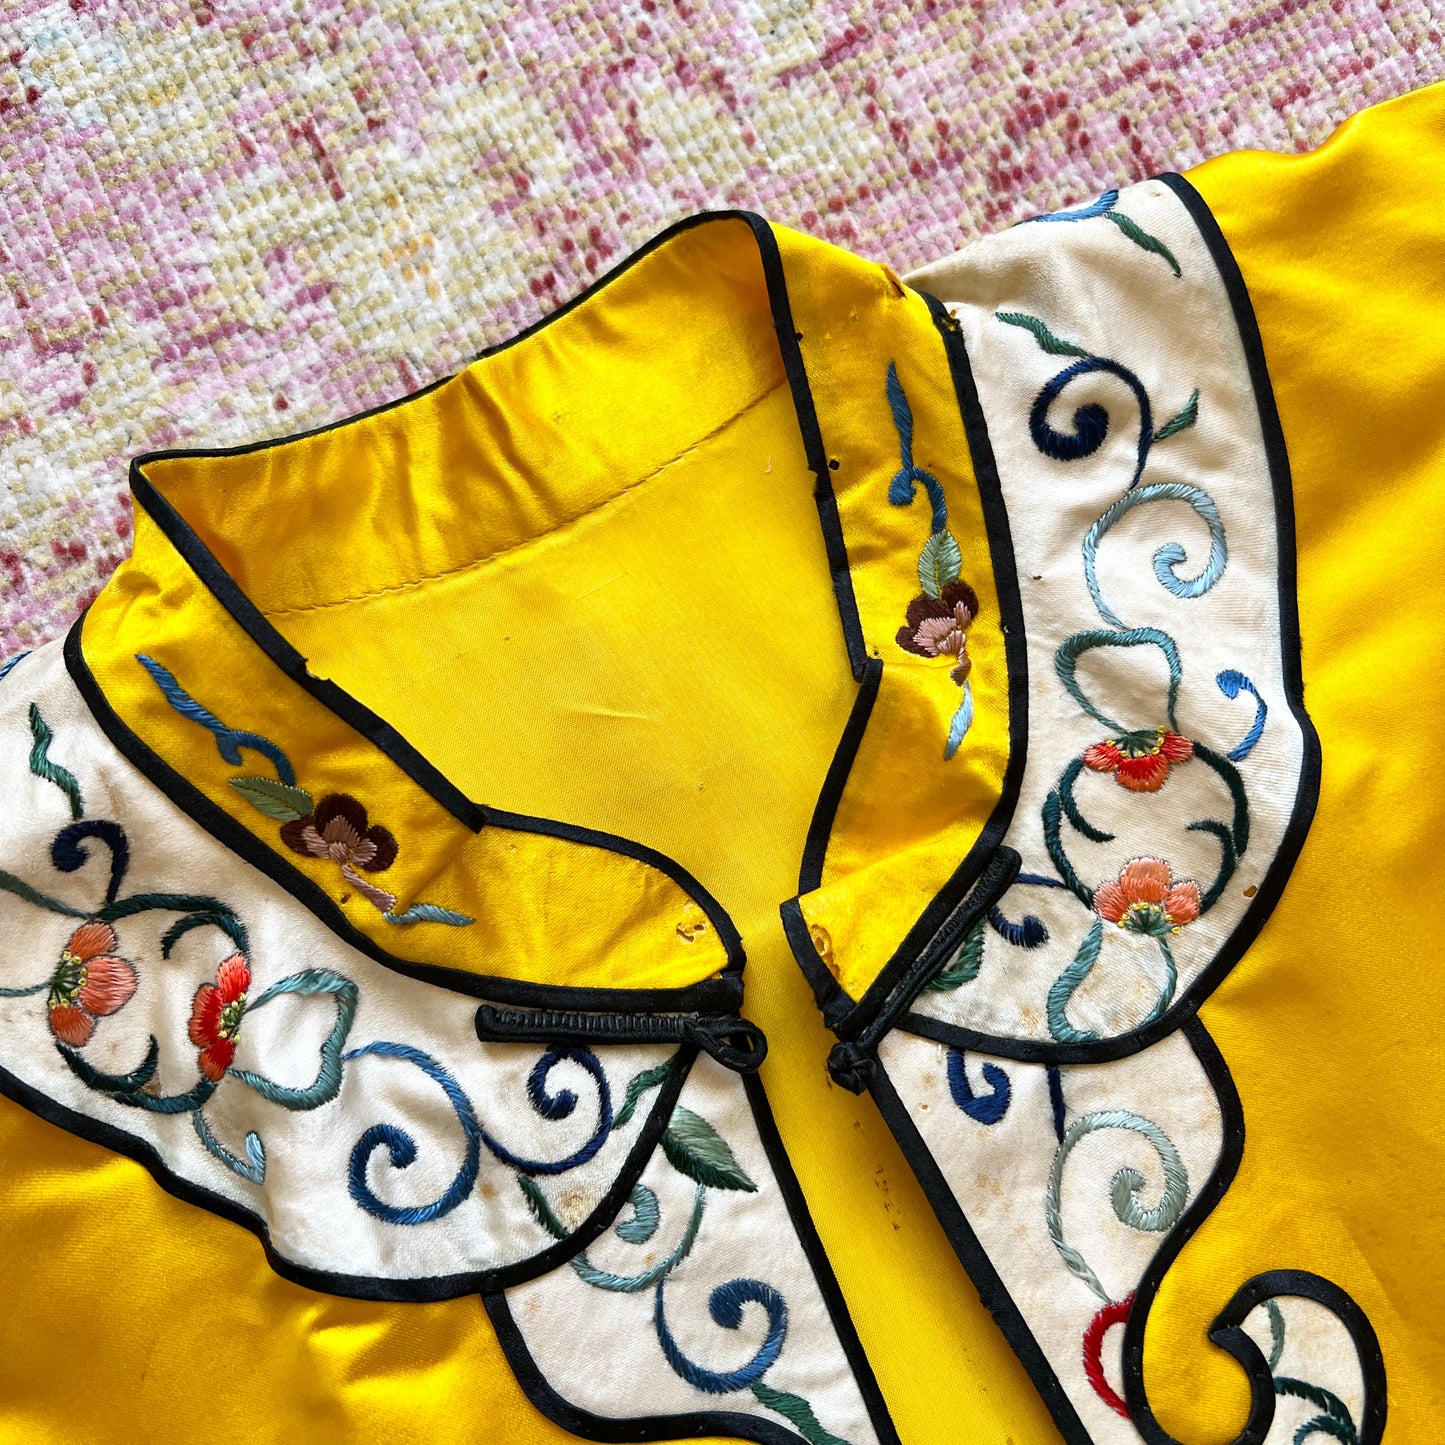 [AS-IS] Vintage Asian Embroidered Silk Jacket | medium/large